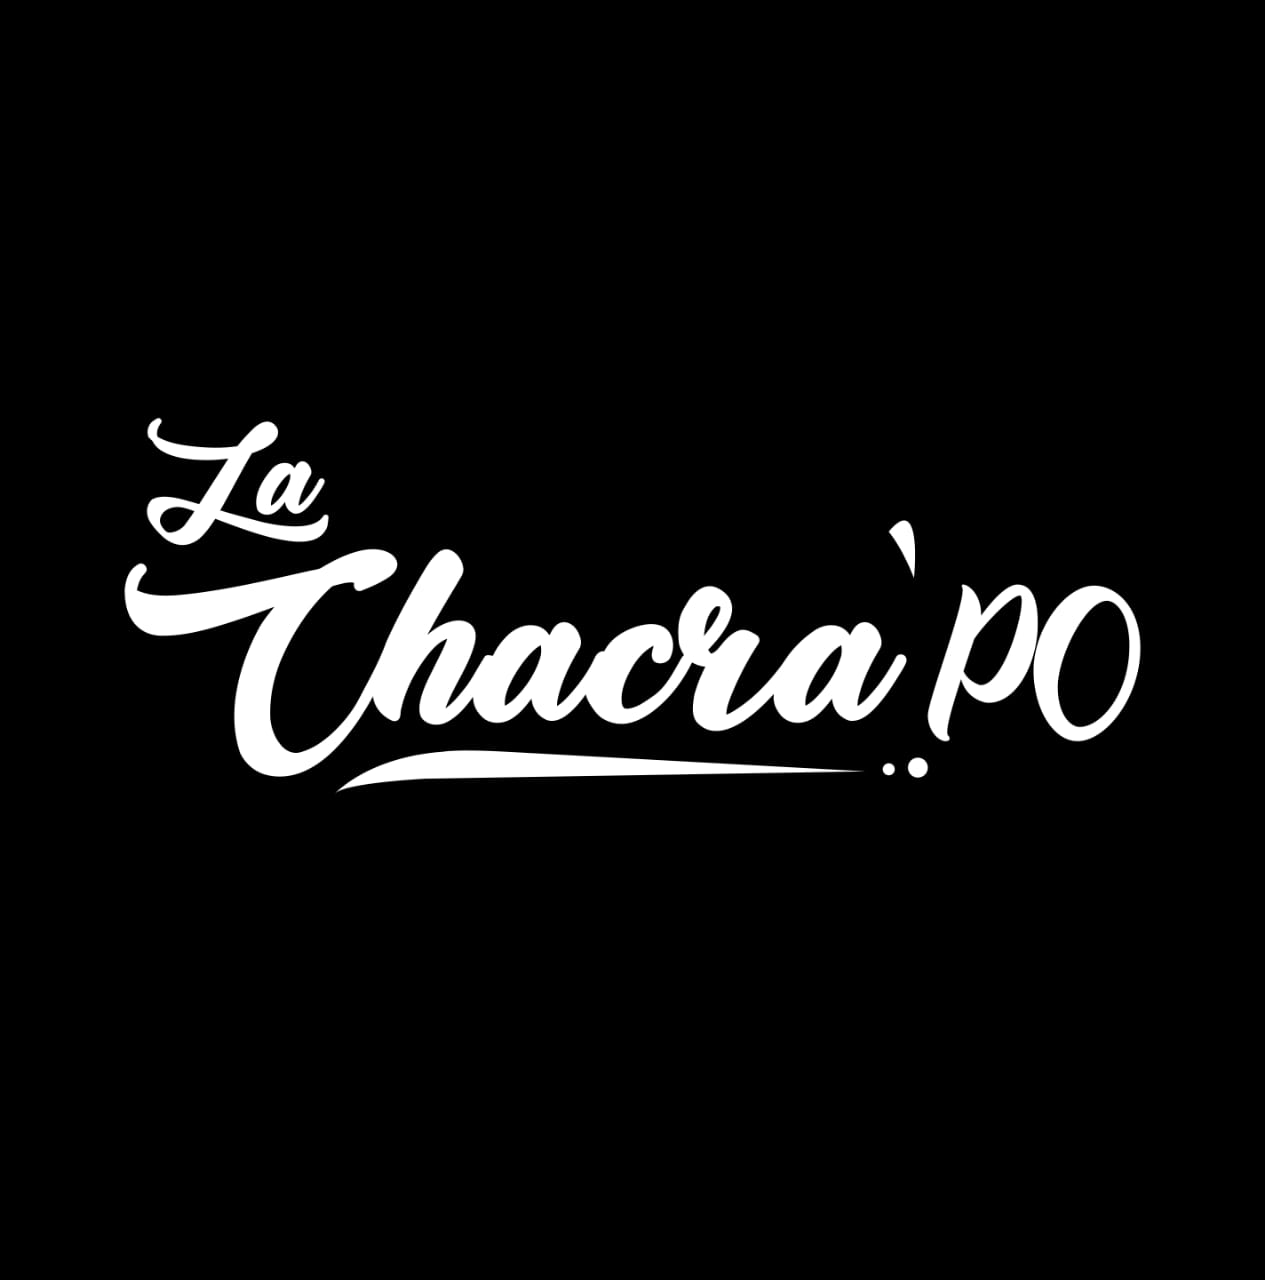 La Chacra Po